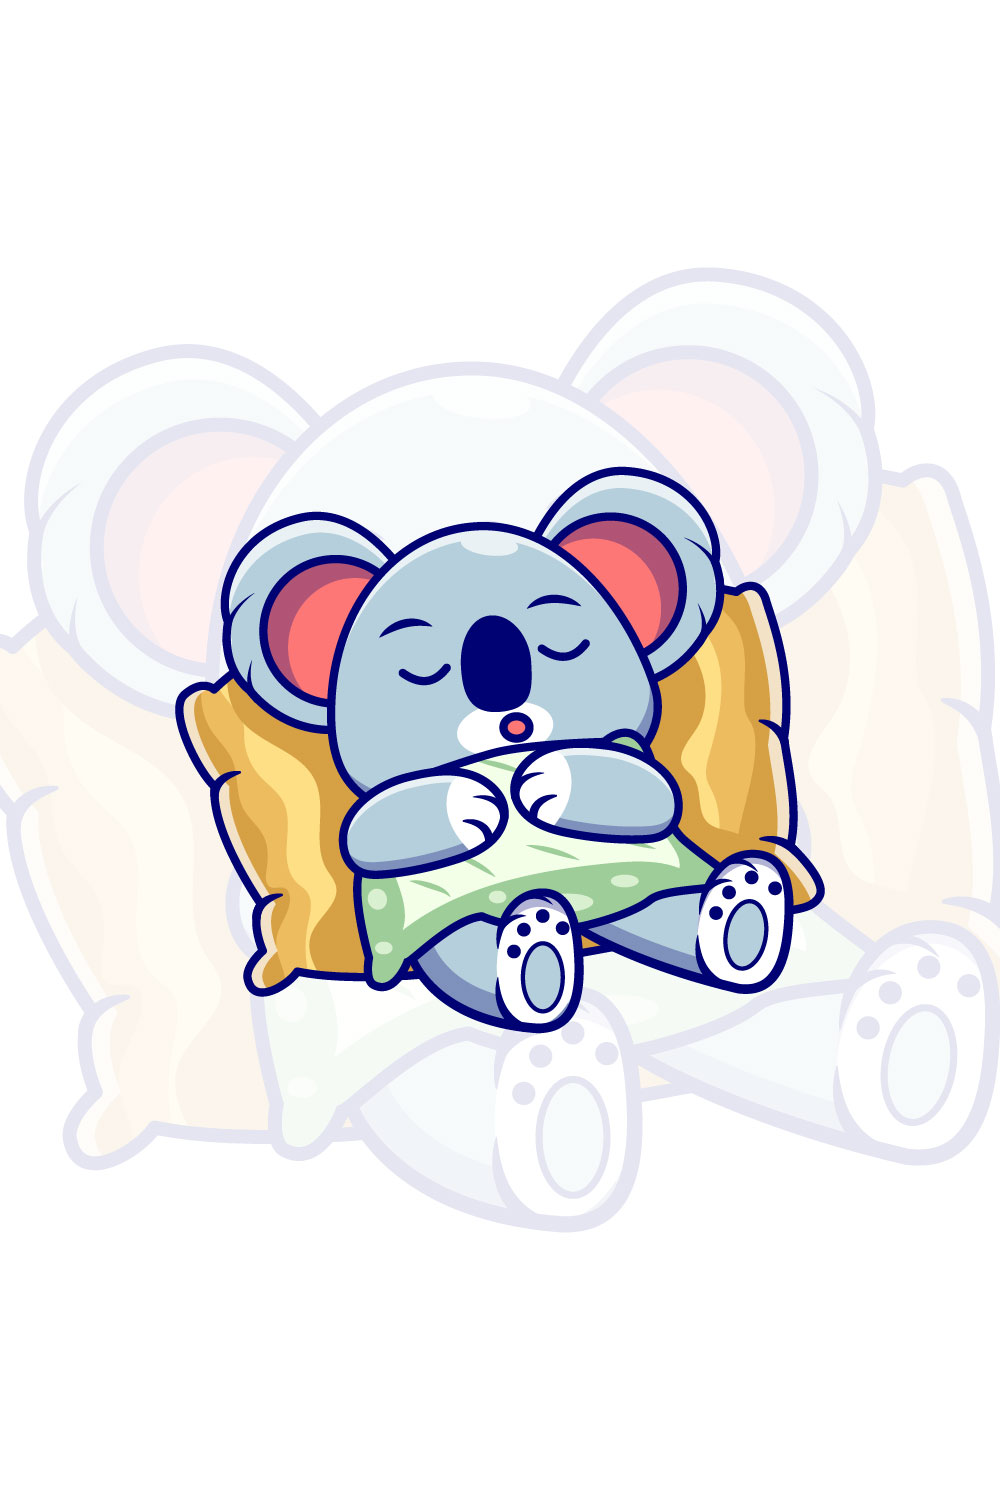 Cute koala sleeping on a pillow cartoon vector icon illustration pinterest preview image.